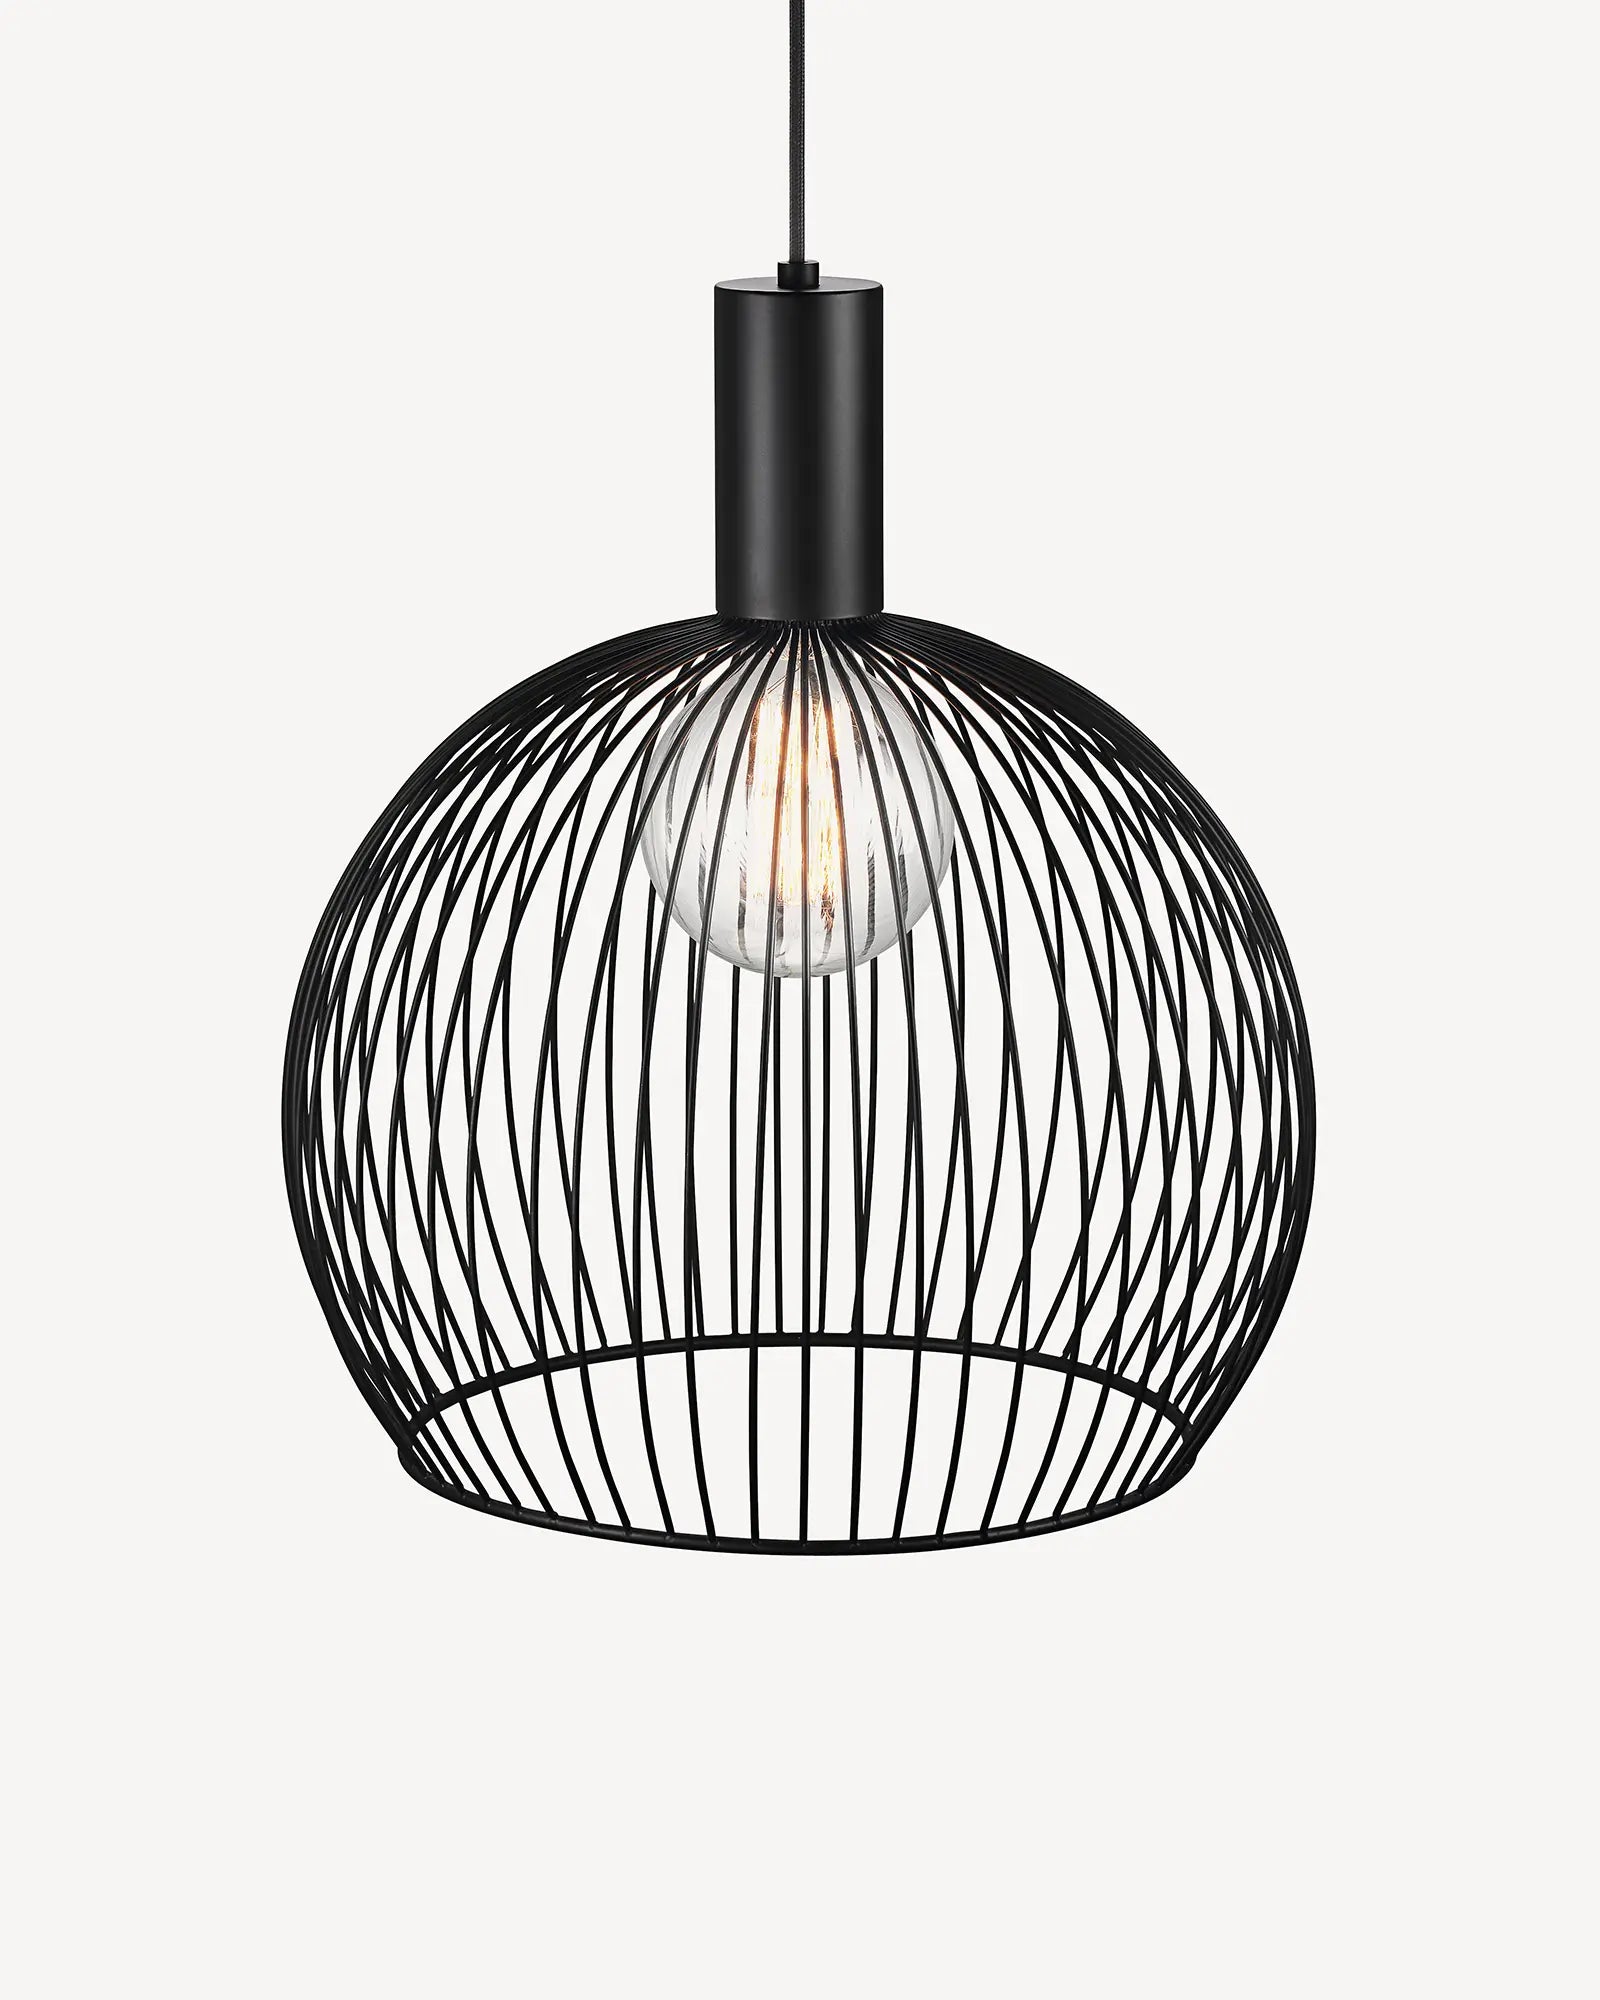 Aver bird cage Scandinavian pendant light 40cm